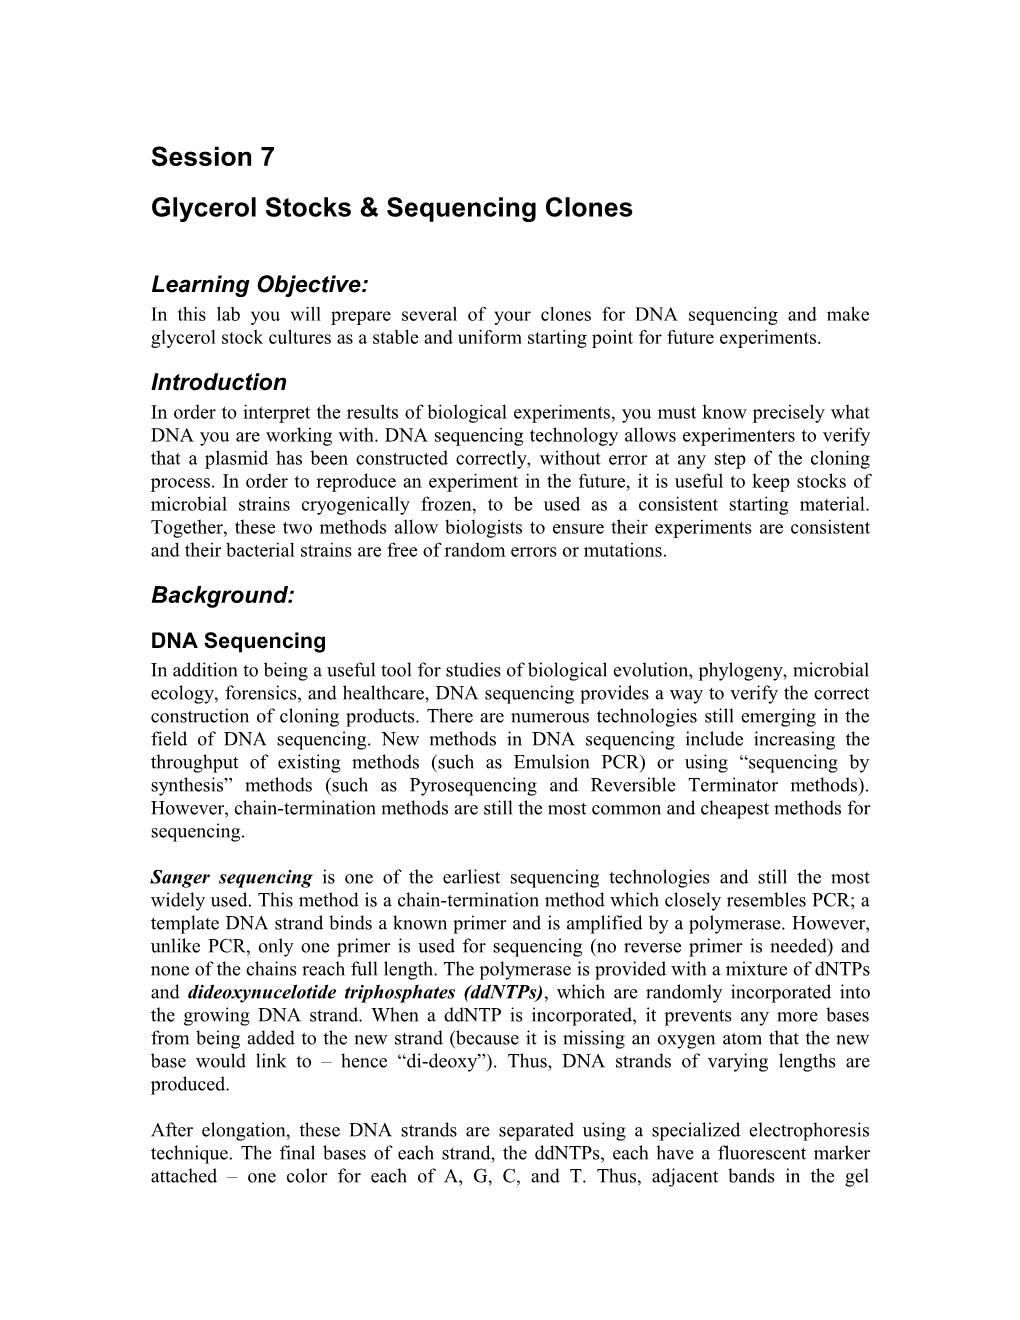 Glycerol Stocks & Sequencing Clones